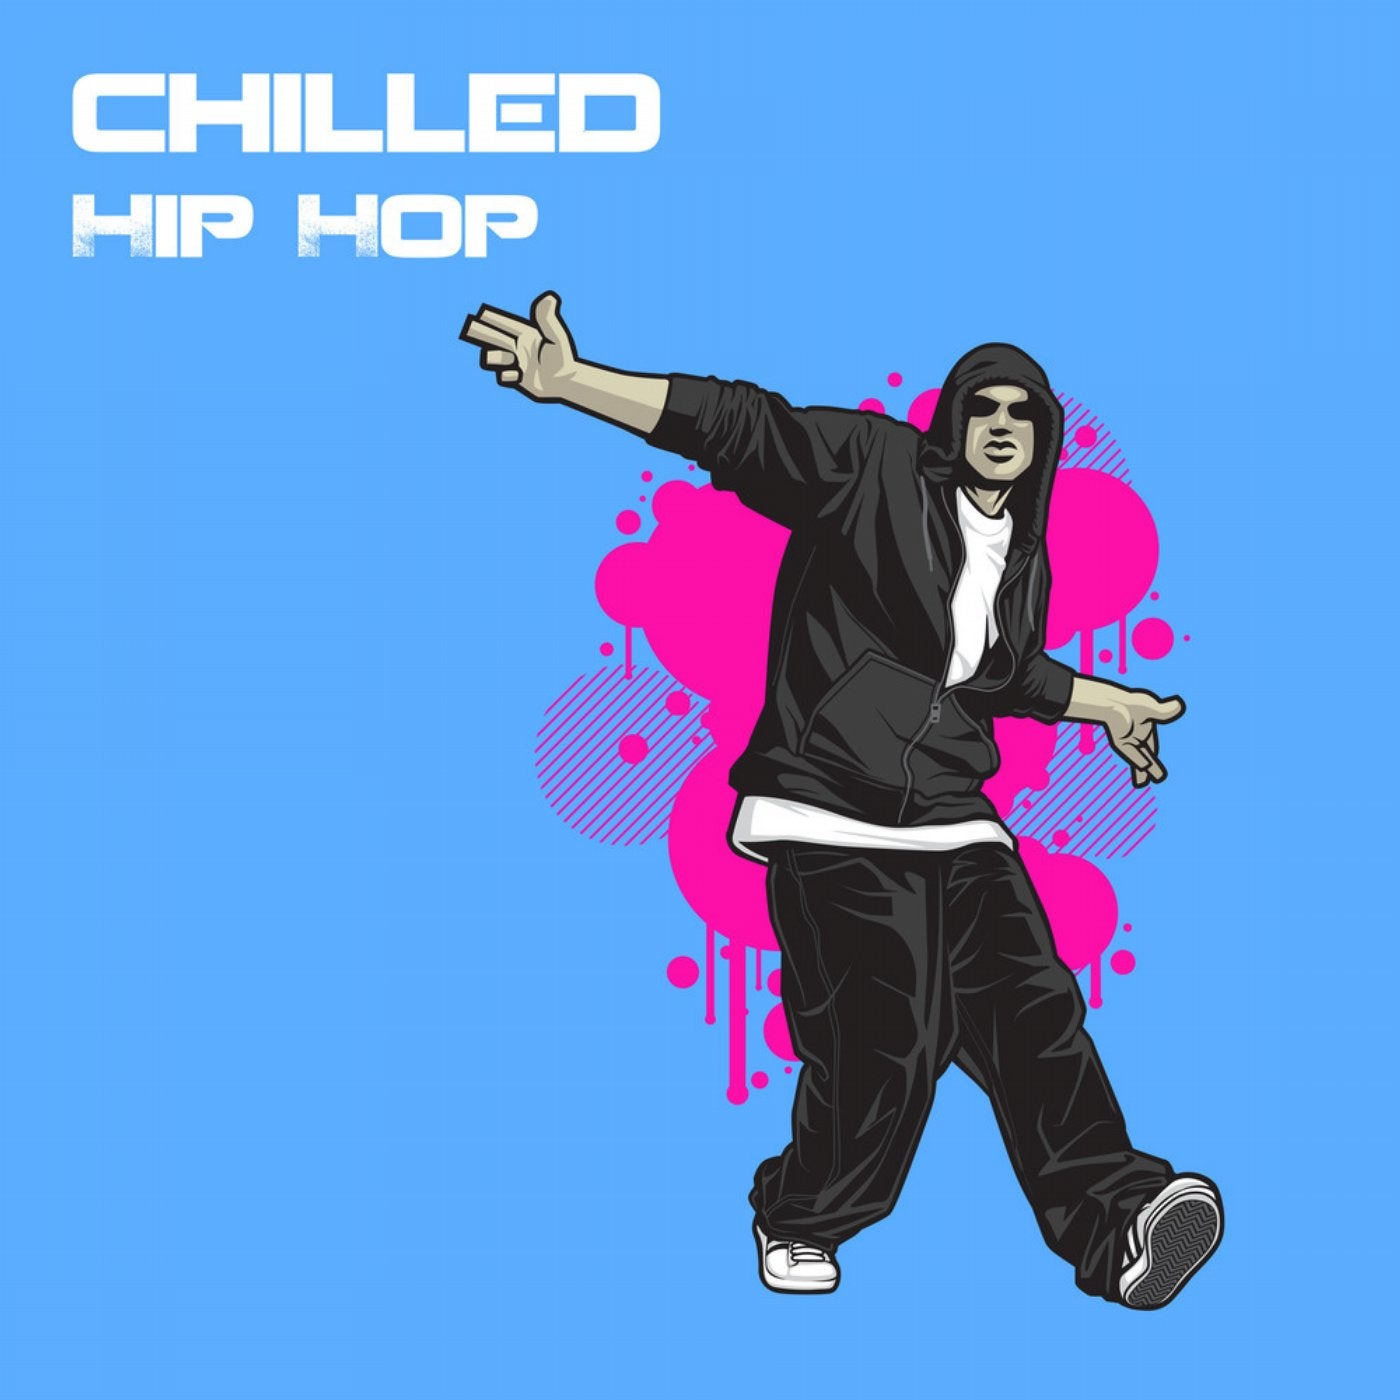 Chill hip hop. Hip Hop Эстетика. Обои хип хоп чил. Трип хоп. Для хип-хоп альбома фон\.